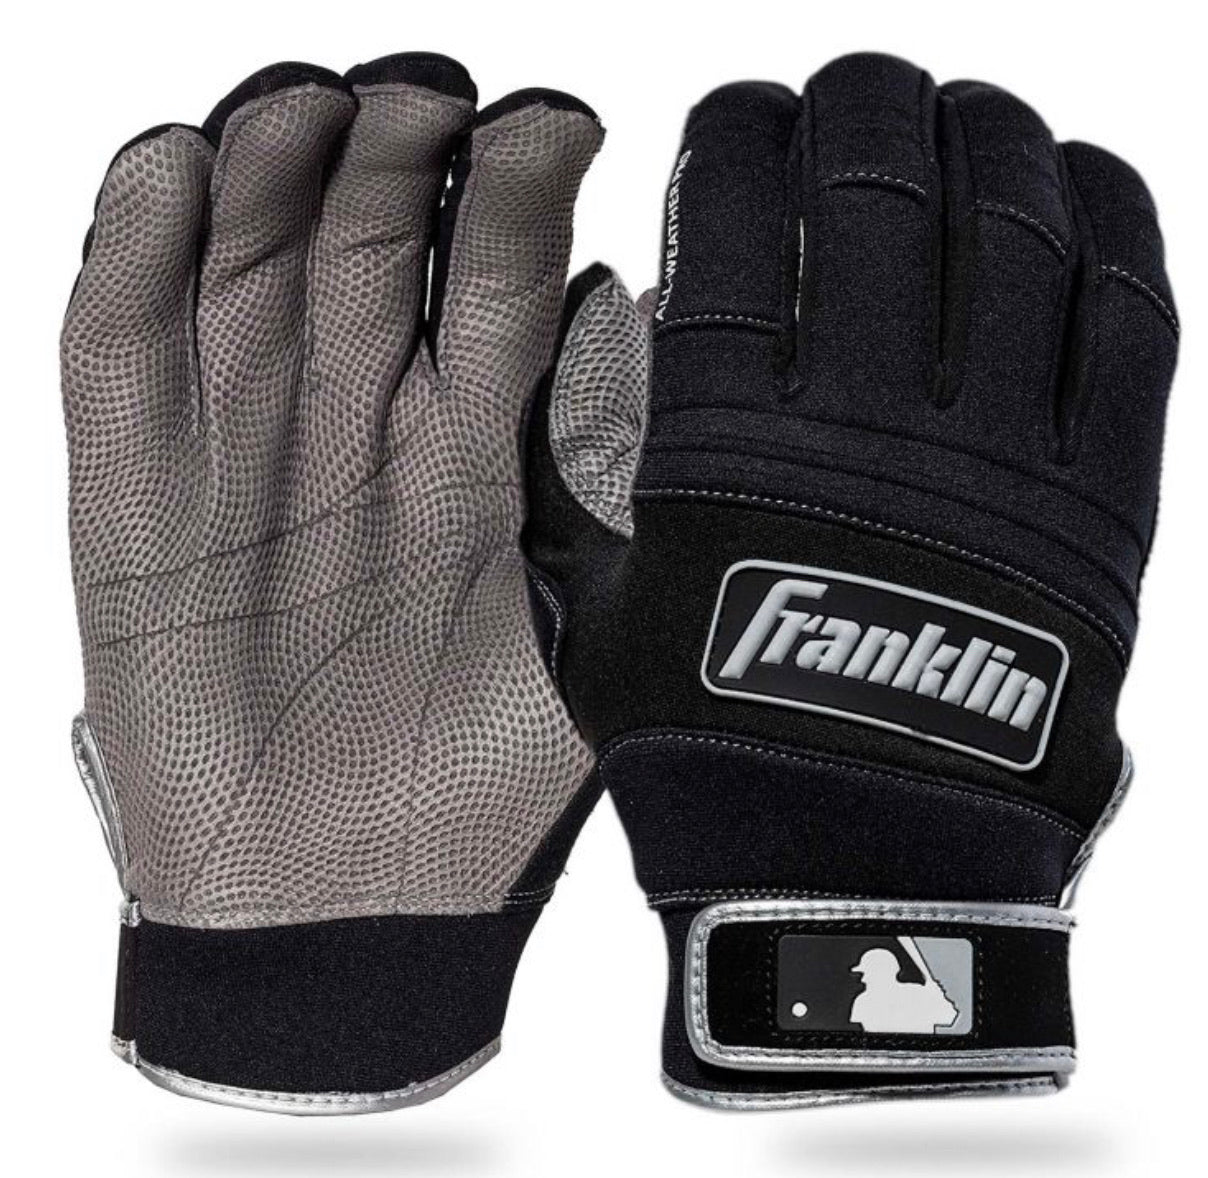 ALL WEATHER Pro Baseball Batting Gloves by Franklin - AtlanticCoastSports